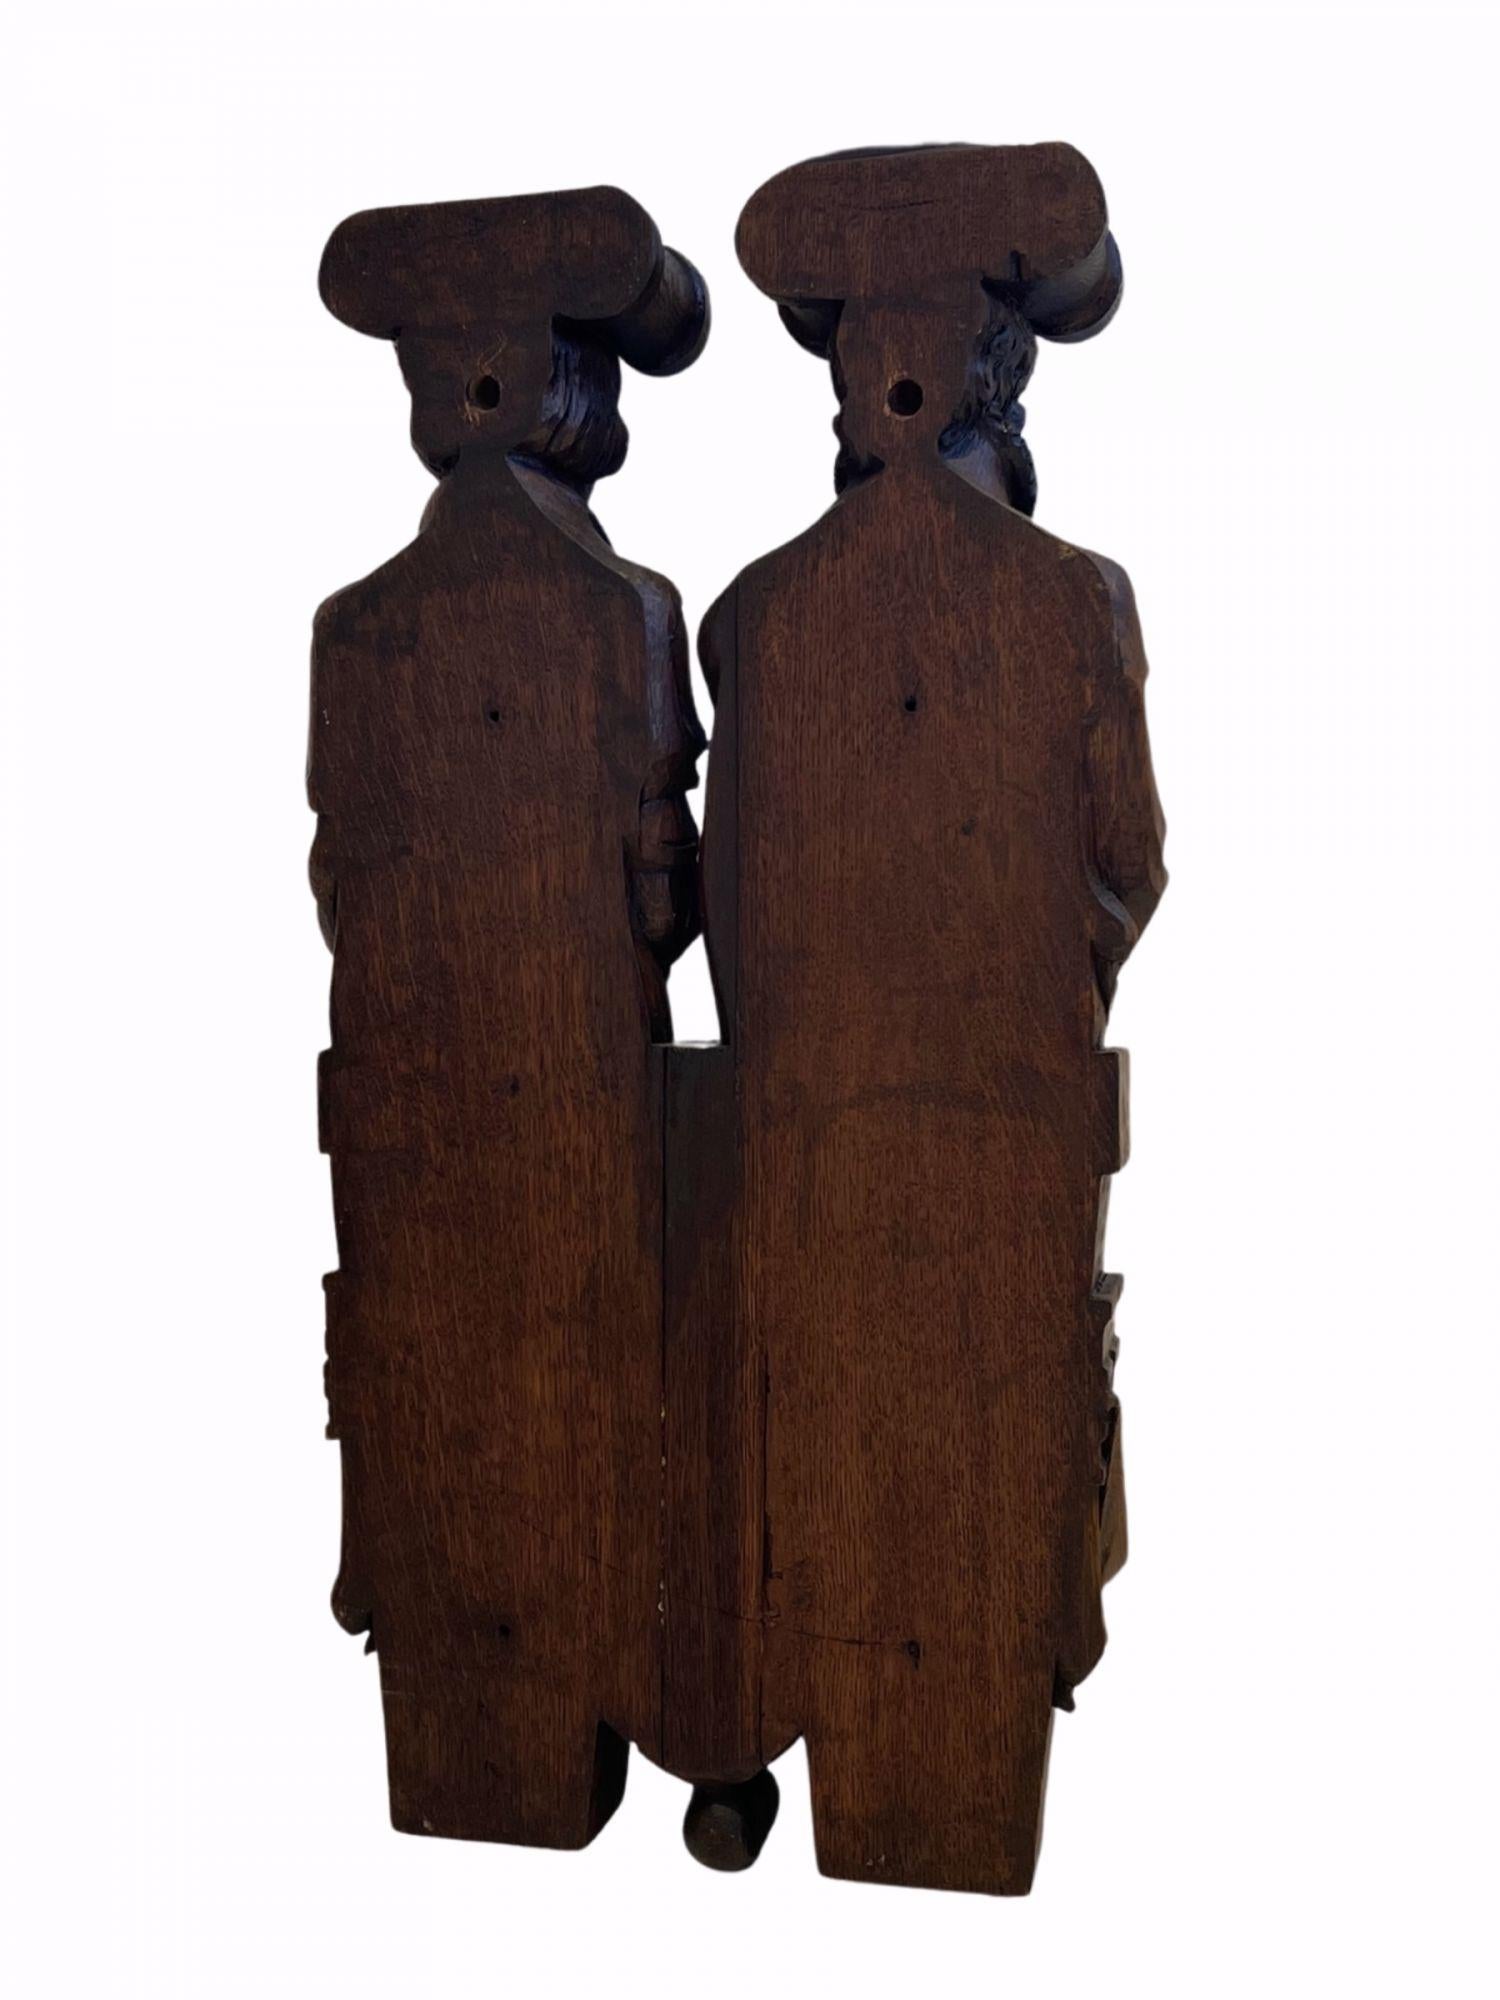 Early 19th Century Pair of German Oak Caryatidal Figures Depicting Historicism For Sale 9